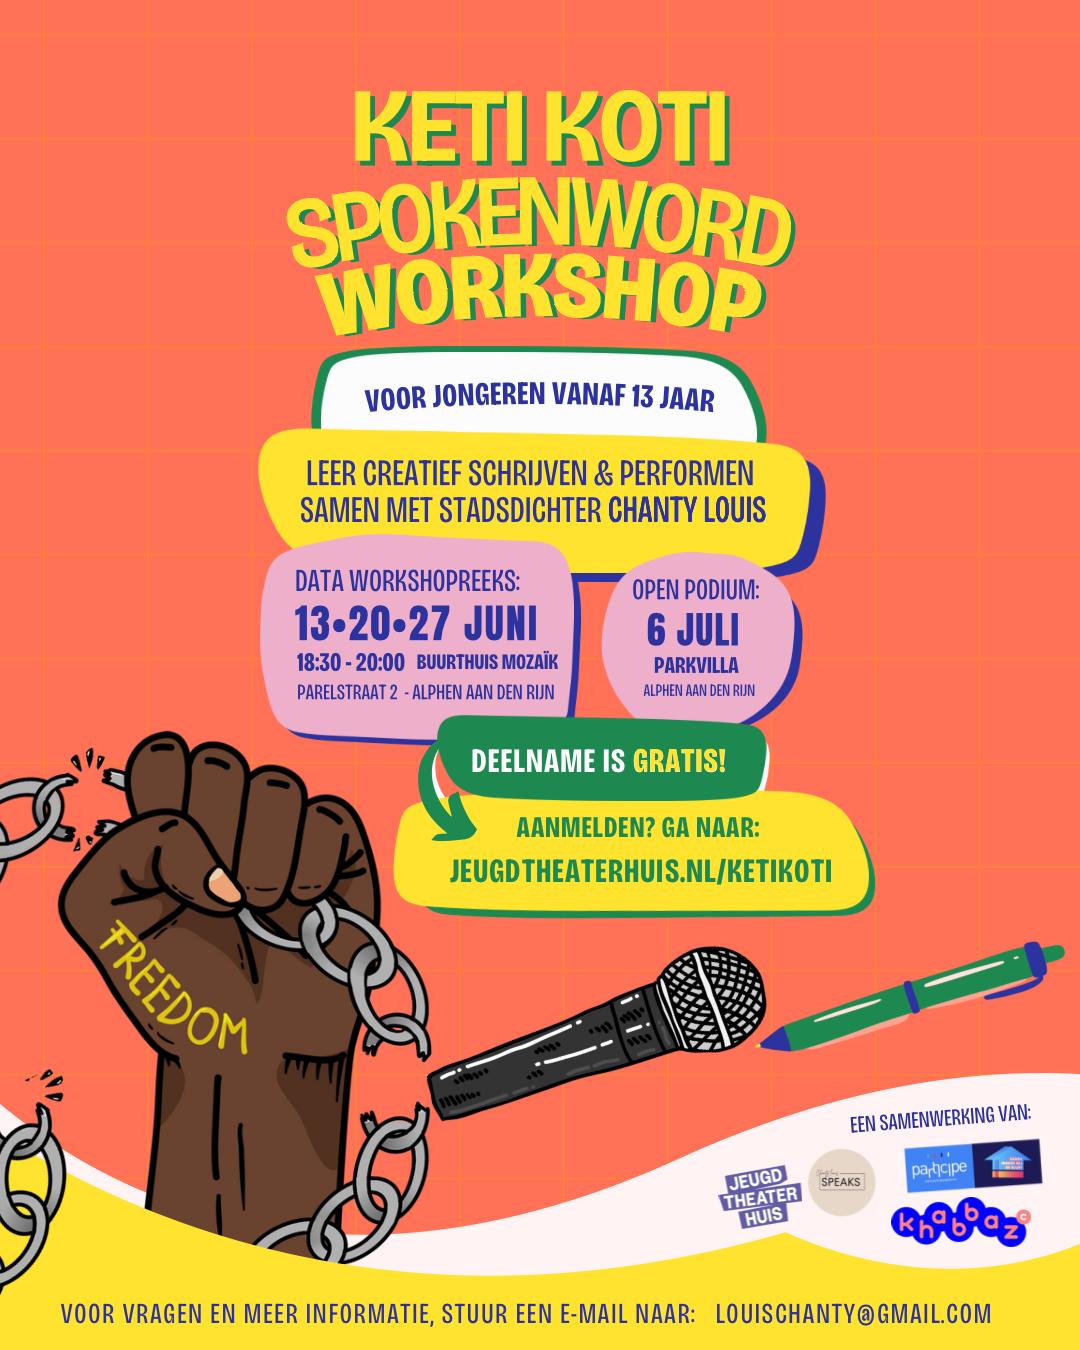 Spoken Wordworkshop